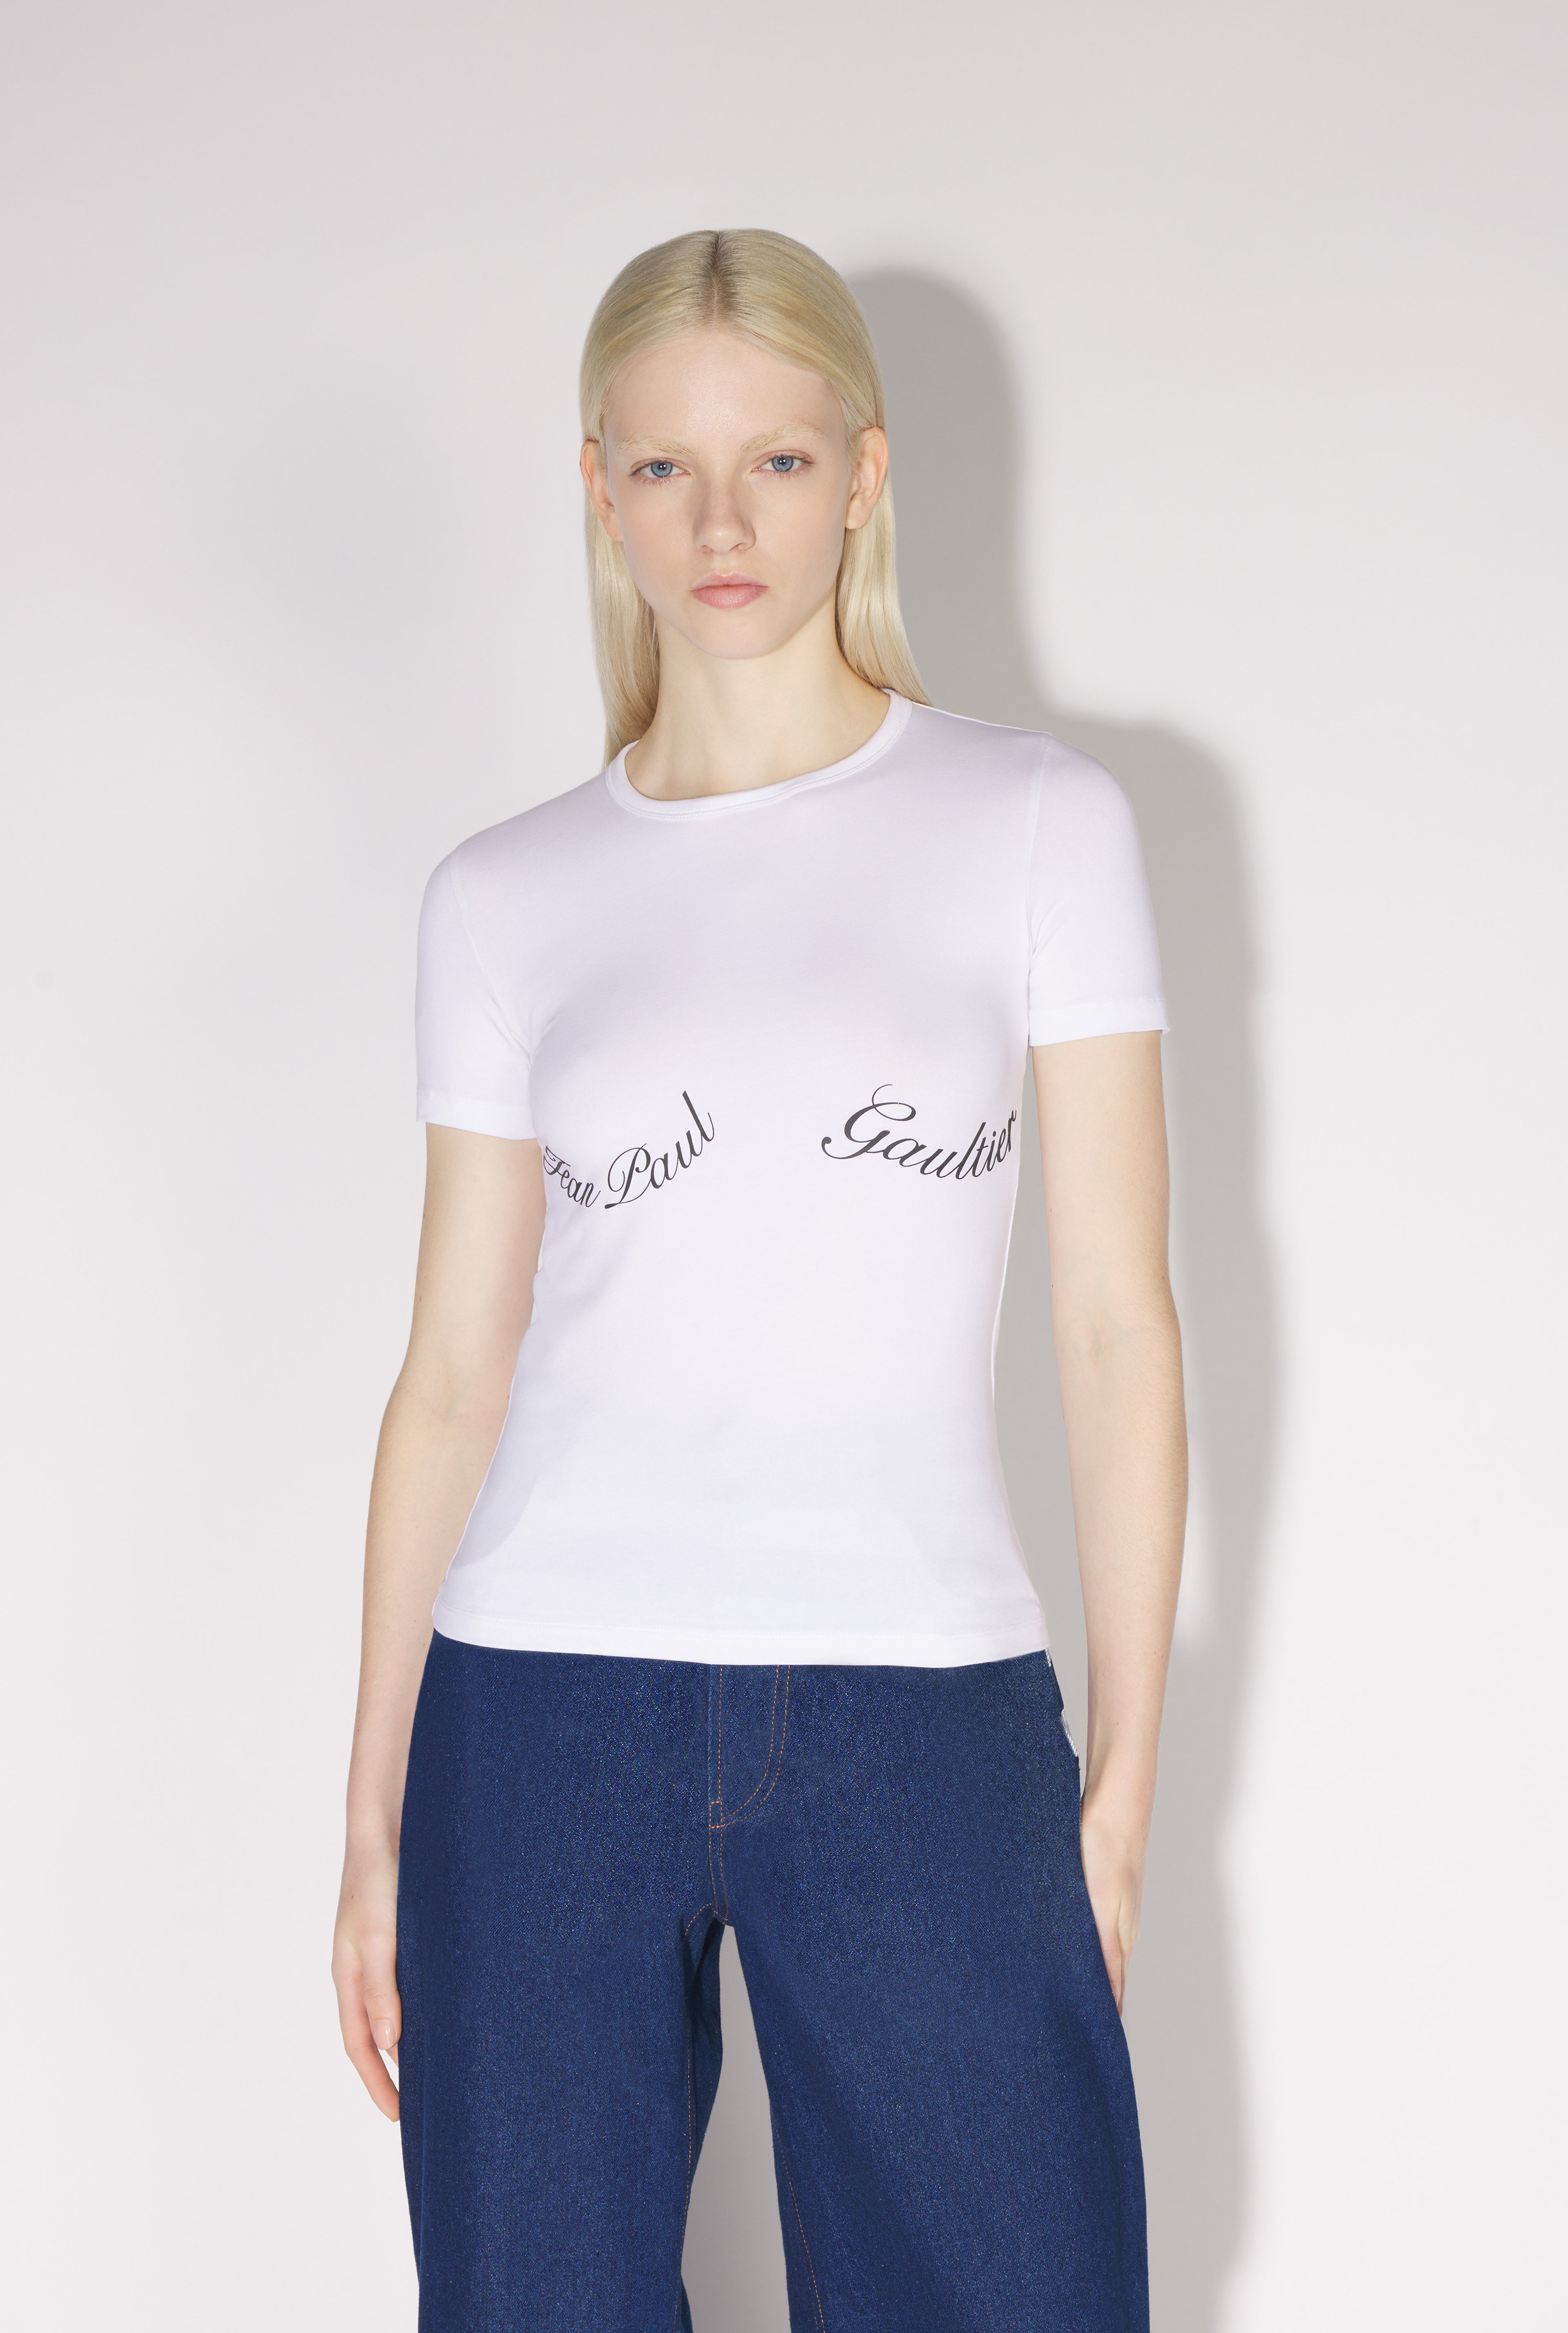 The White Jean Paul Gaultier T-Shirt